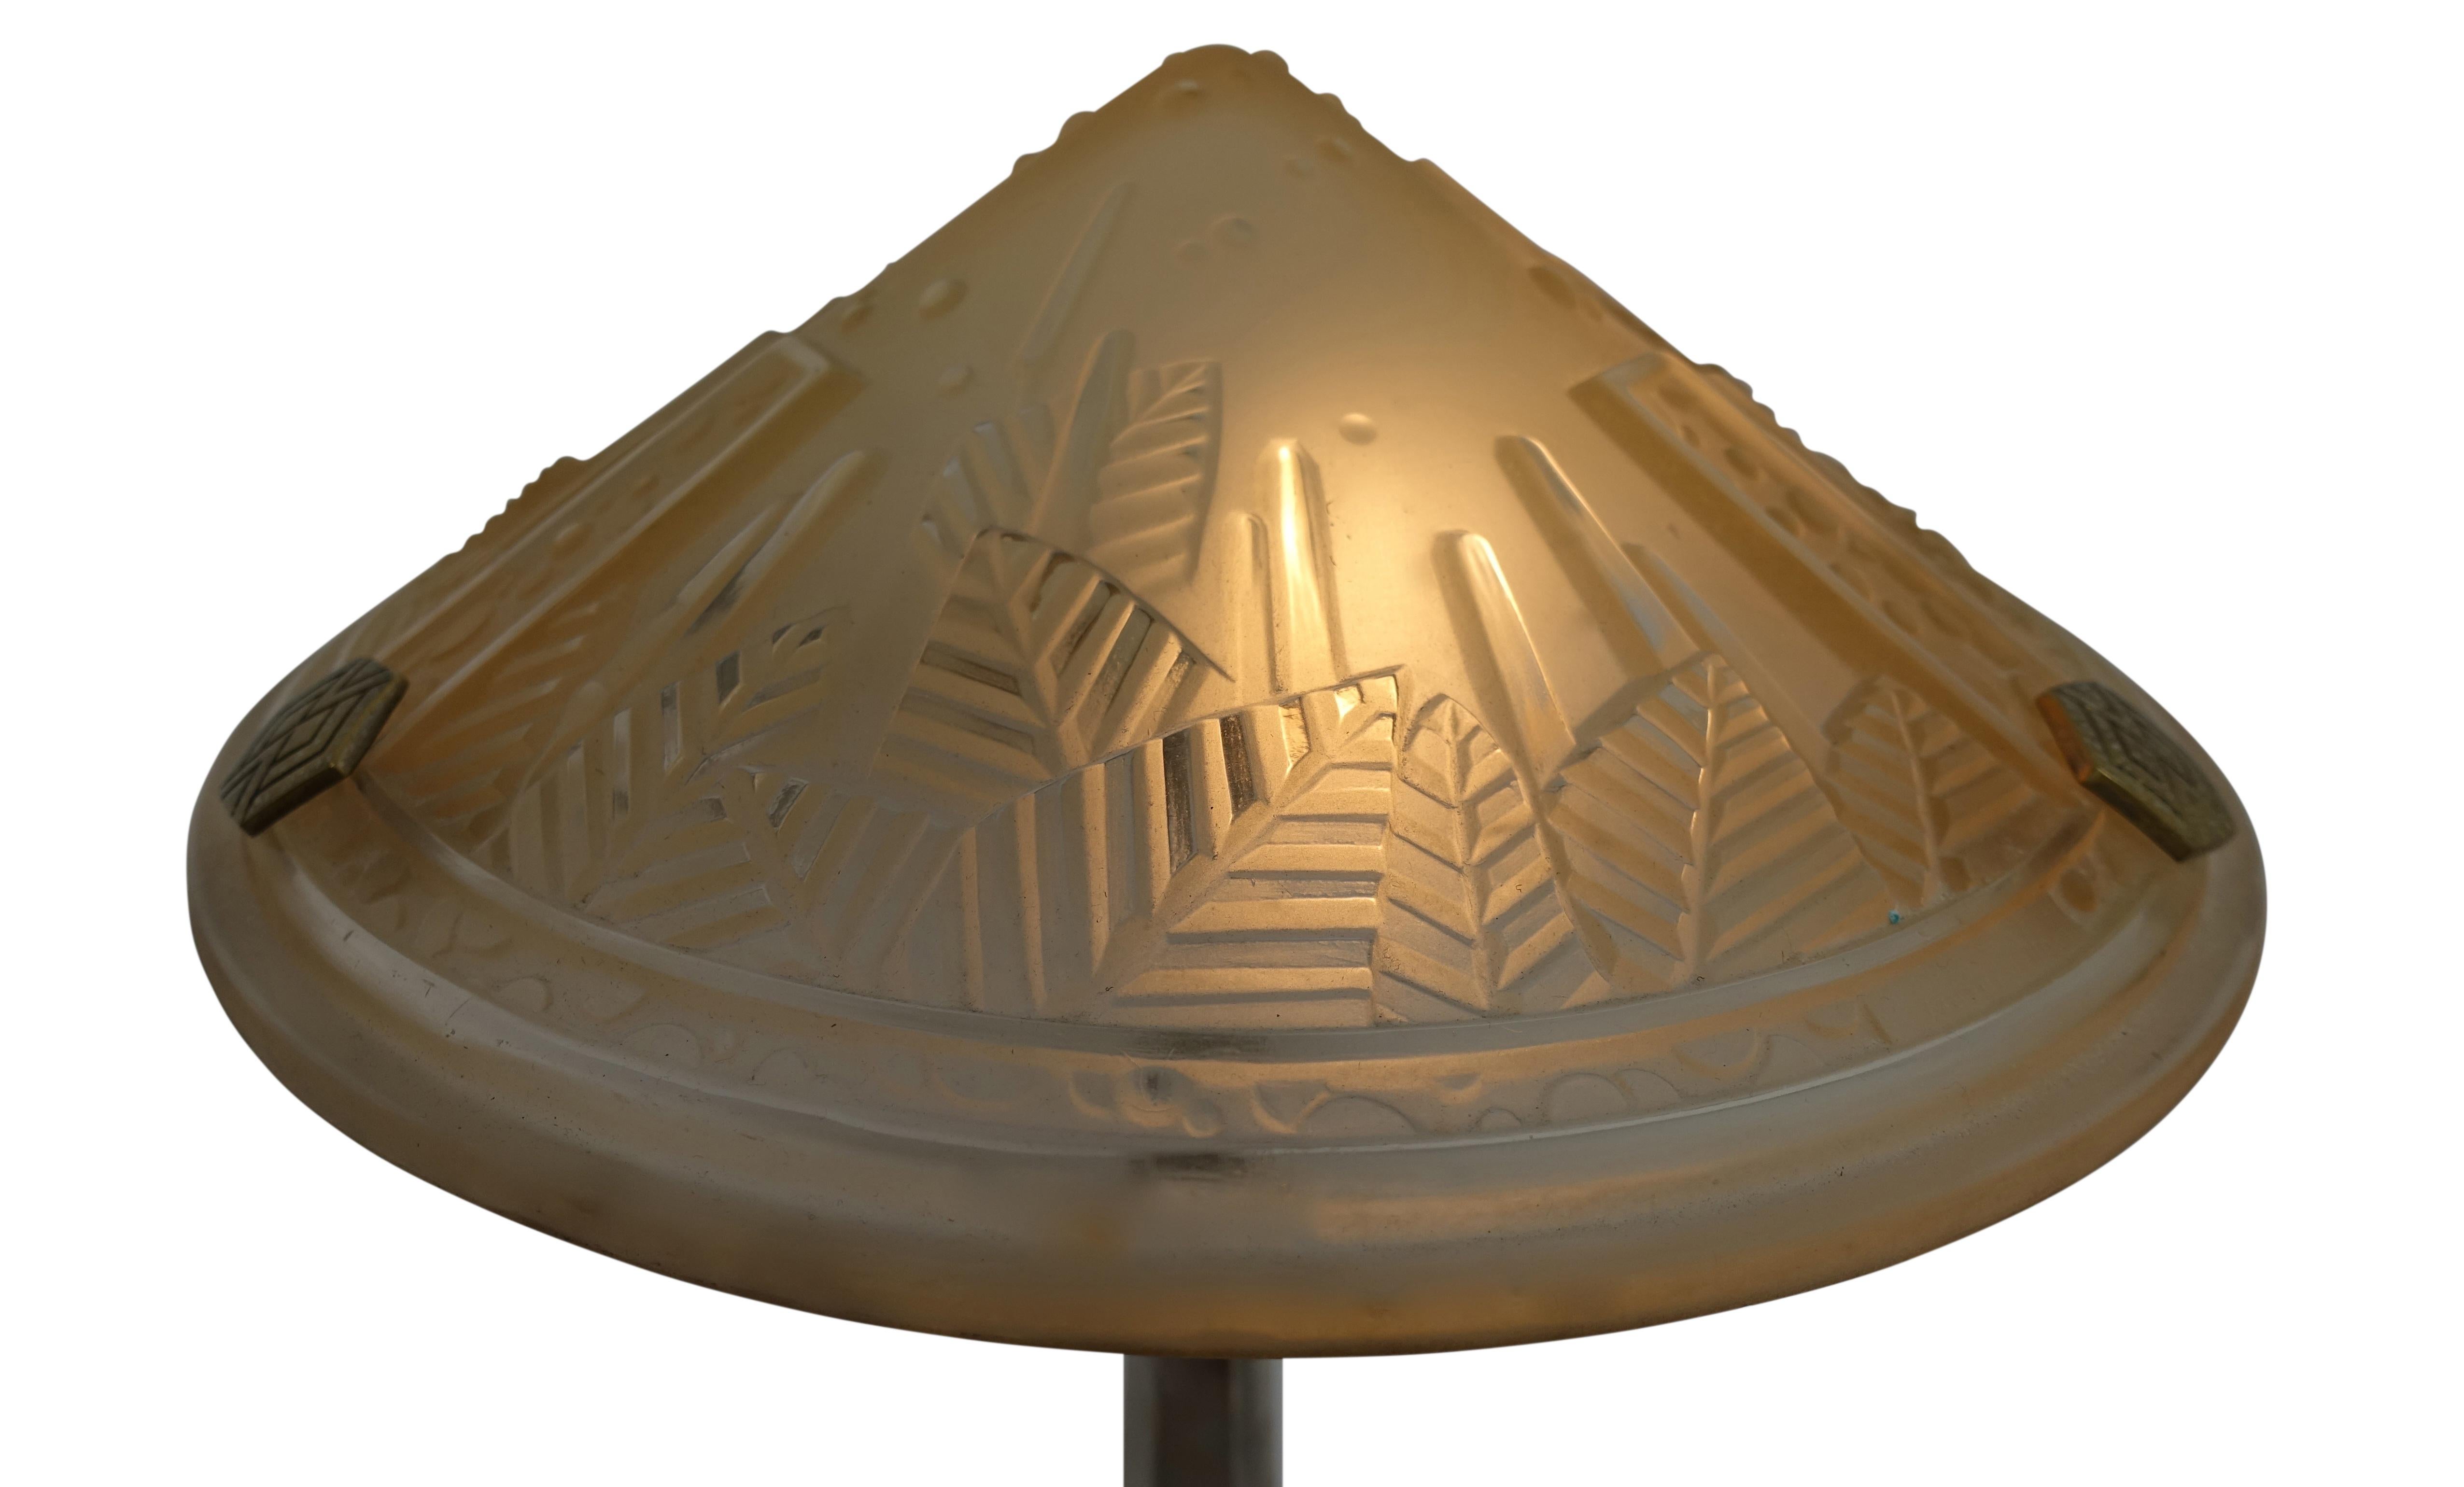 1930's art deco table lamps